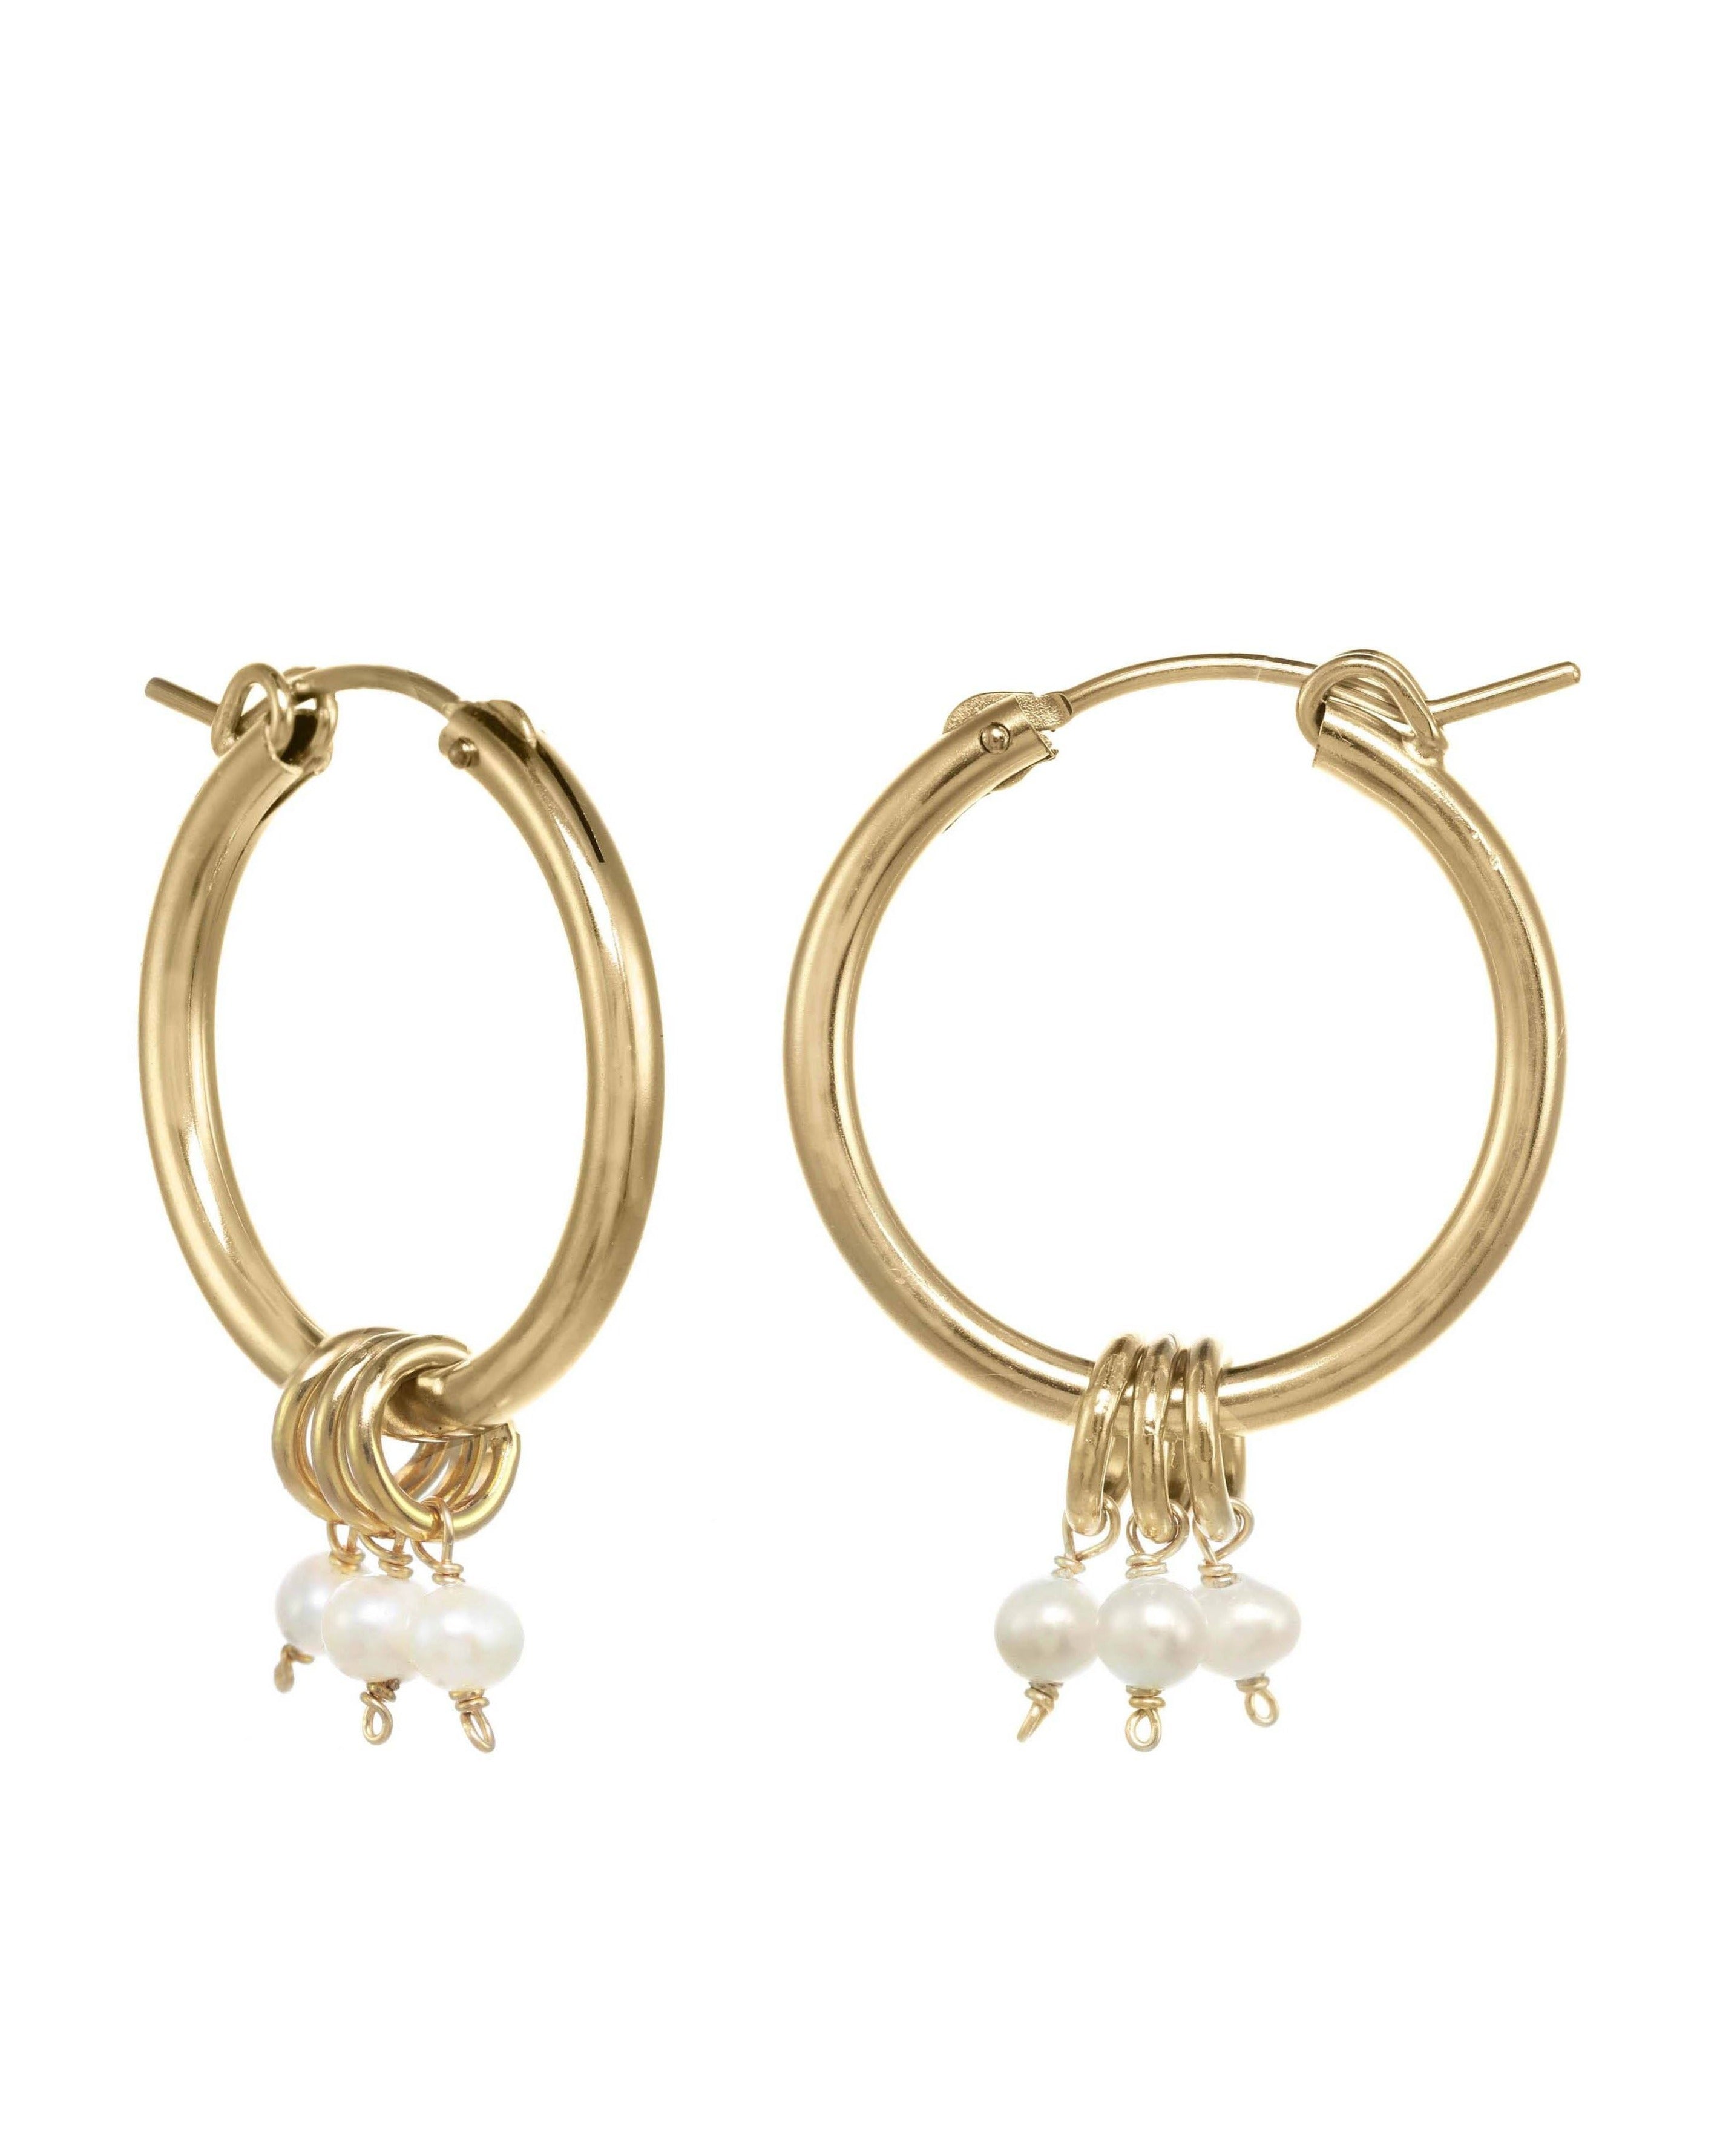 Noelle Hoop Earrings by KOZAKH. 22mm snap closure hoop earrings in 14K Gold Filled, featuring 7mm white Potato Pearls.